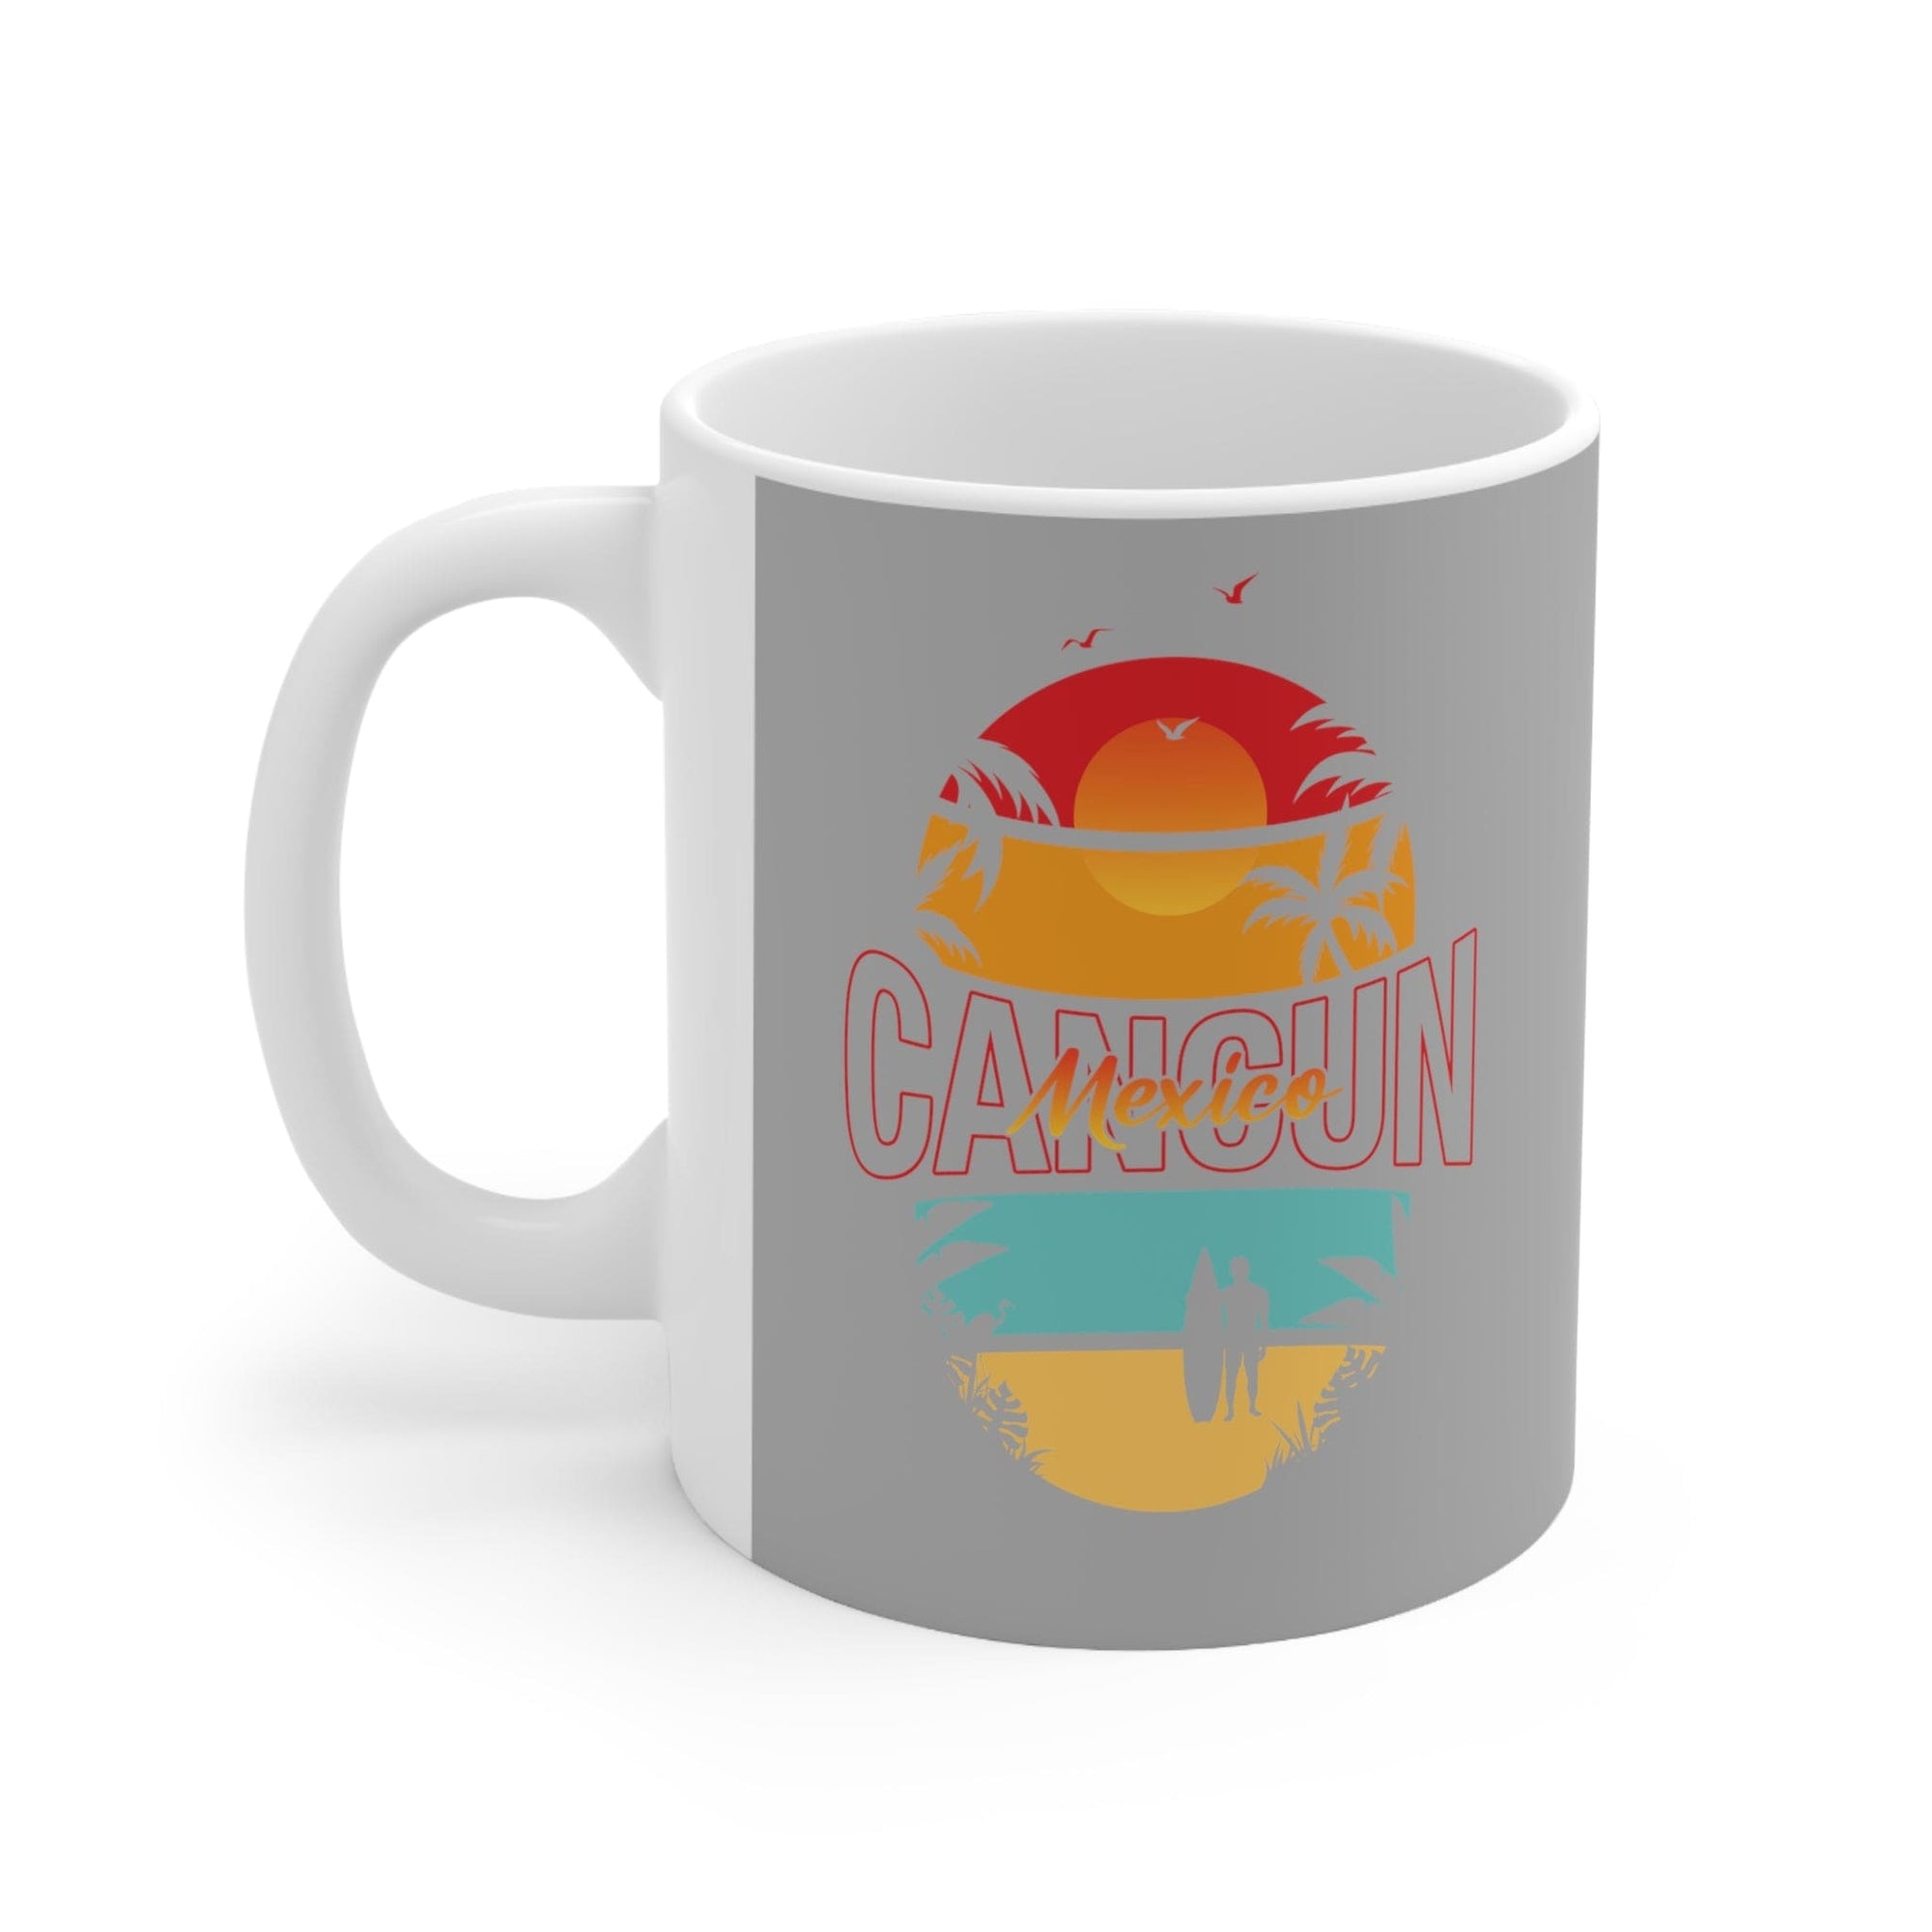 CANCUN - Awesome Ceramic Mug, Exclusive Design